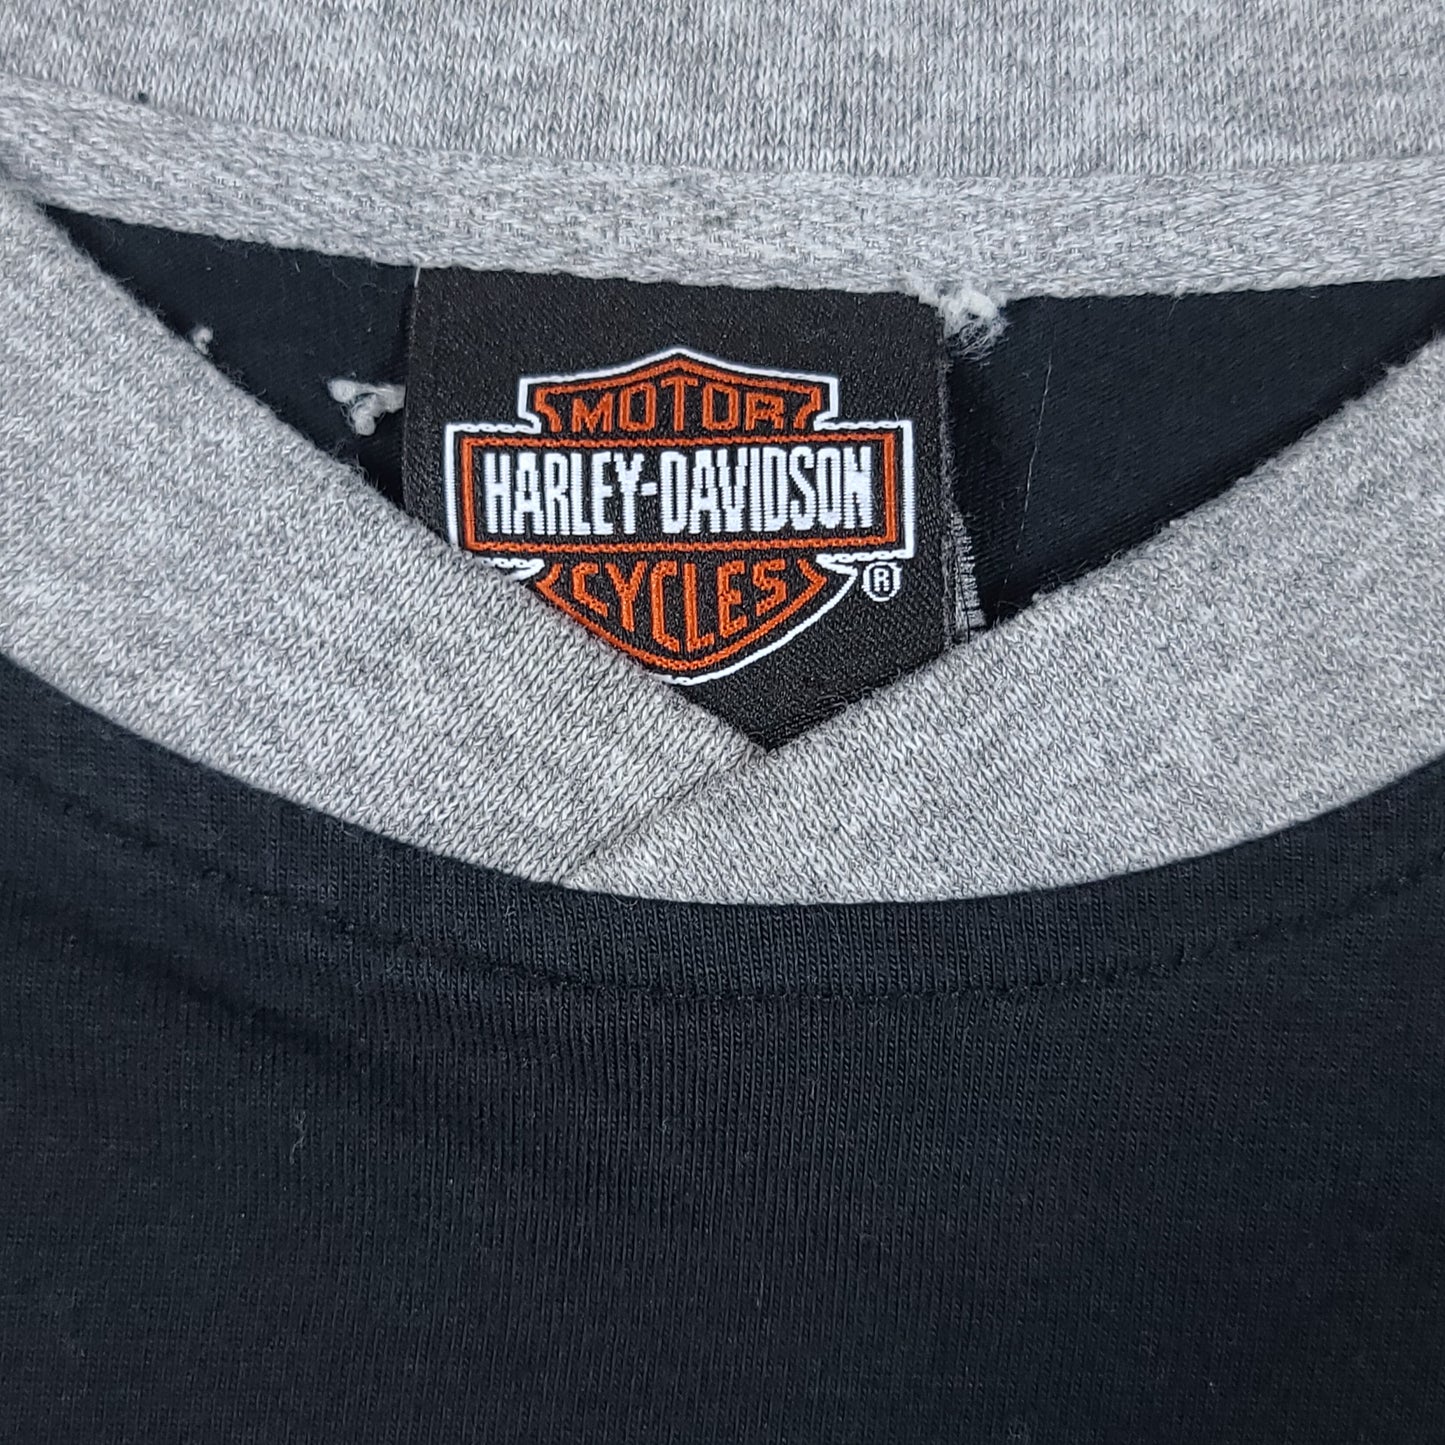 Harley Davidon New Berlin Wisconsin Tee